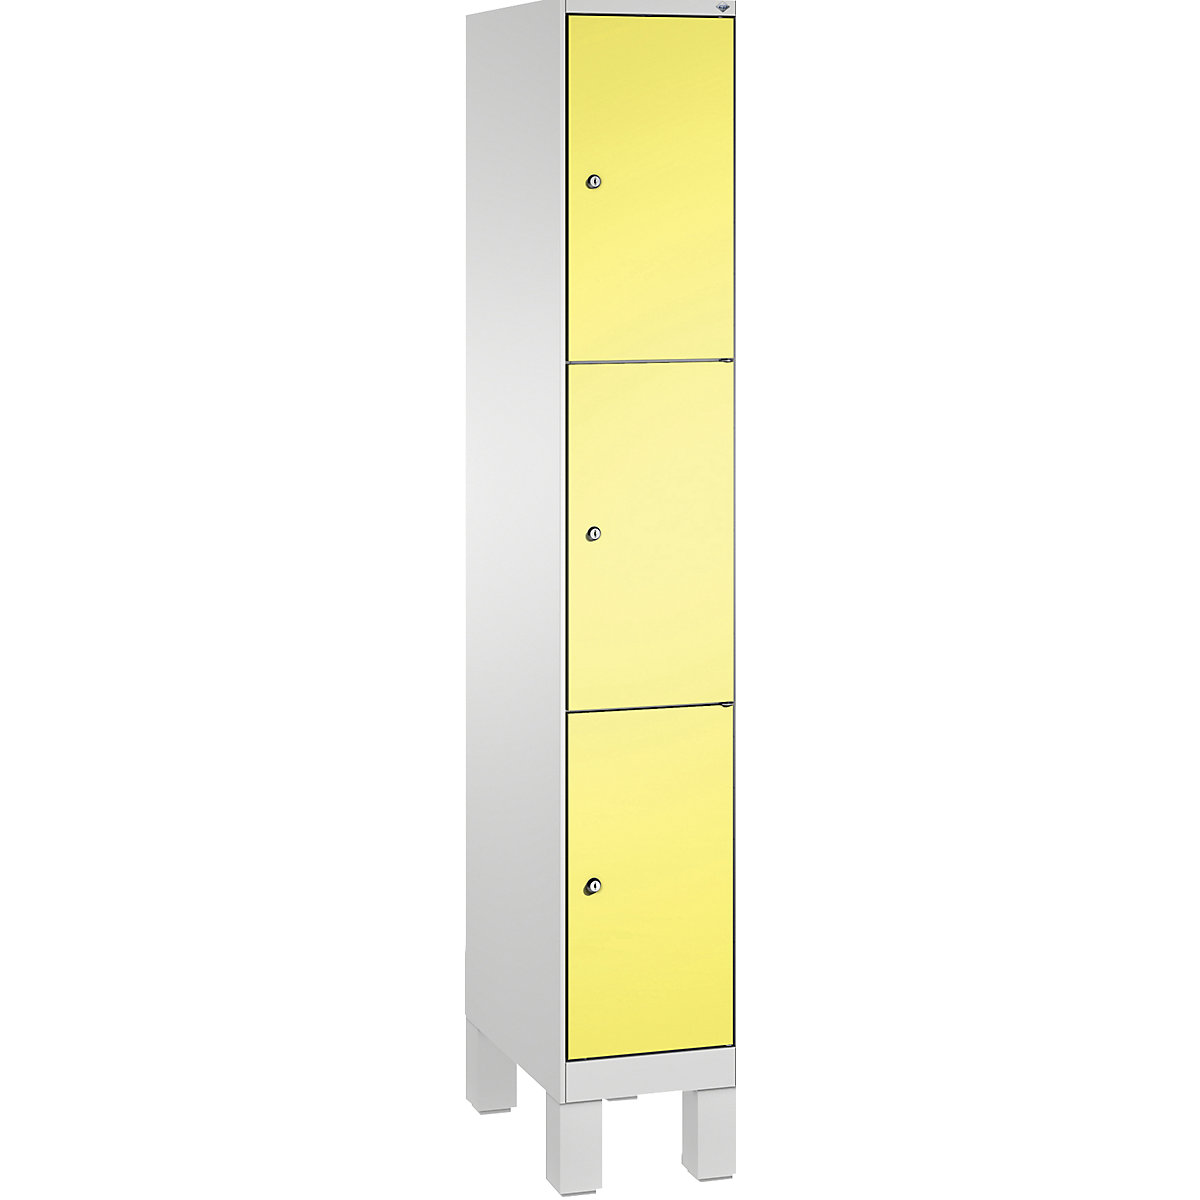 EVOLO locker unit, with feet – C+P, 1 compartment, 3 shelf compartments, compartment width 300 mm, light grey / sulphur yellow